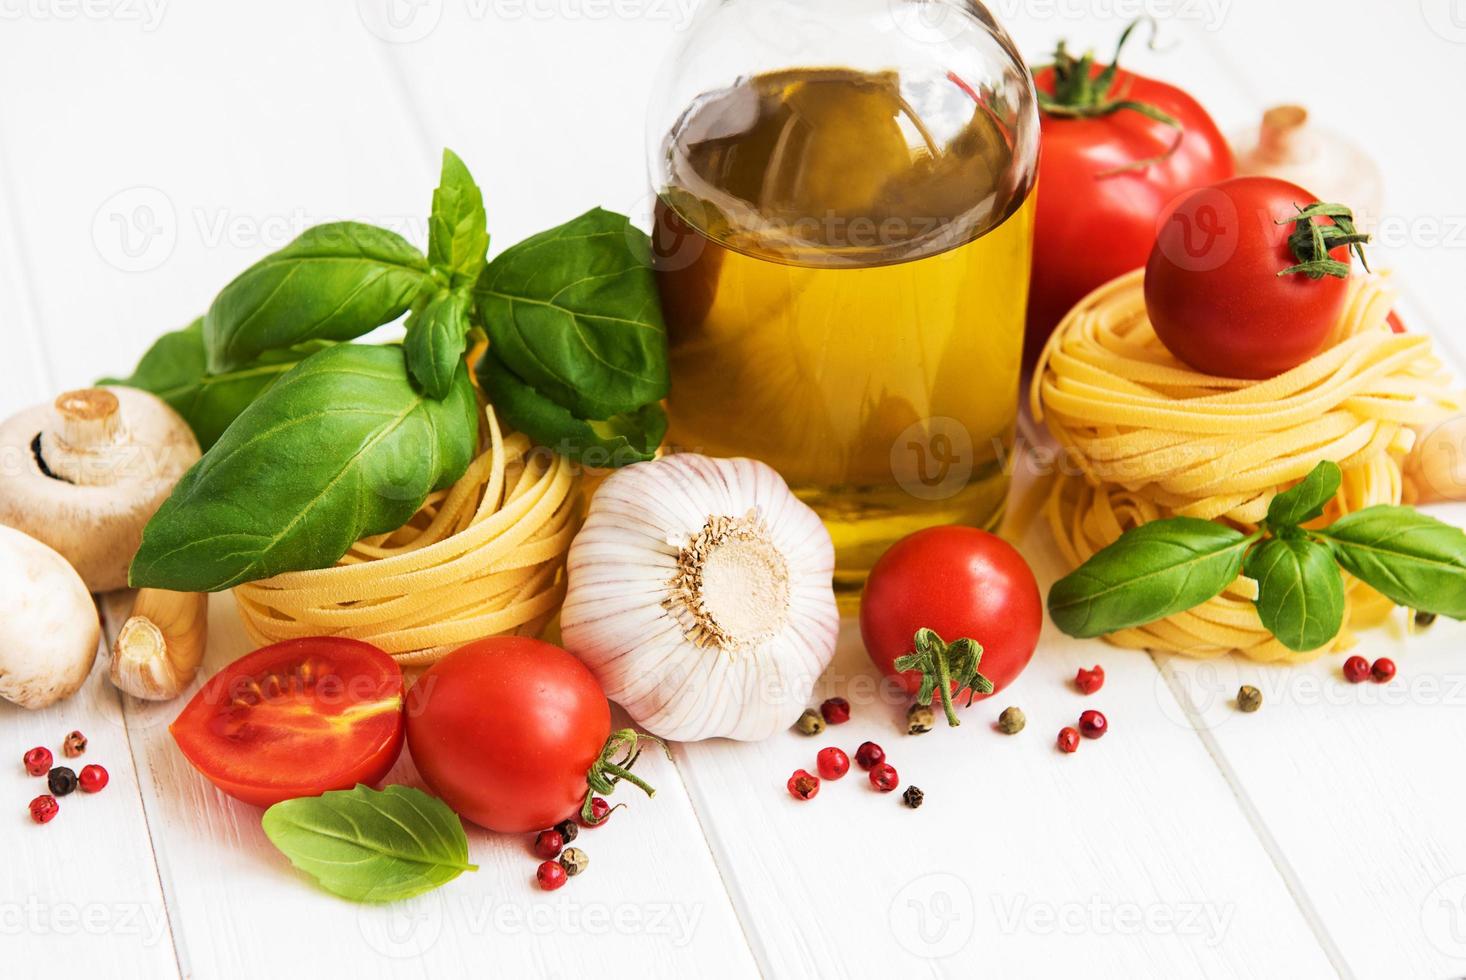 ingredientes alimentares italianos foto